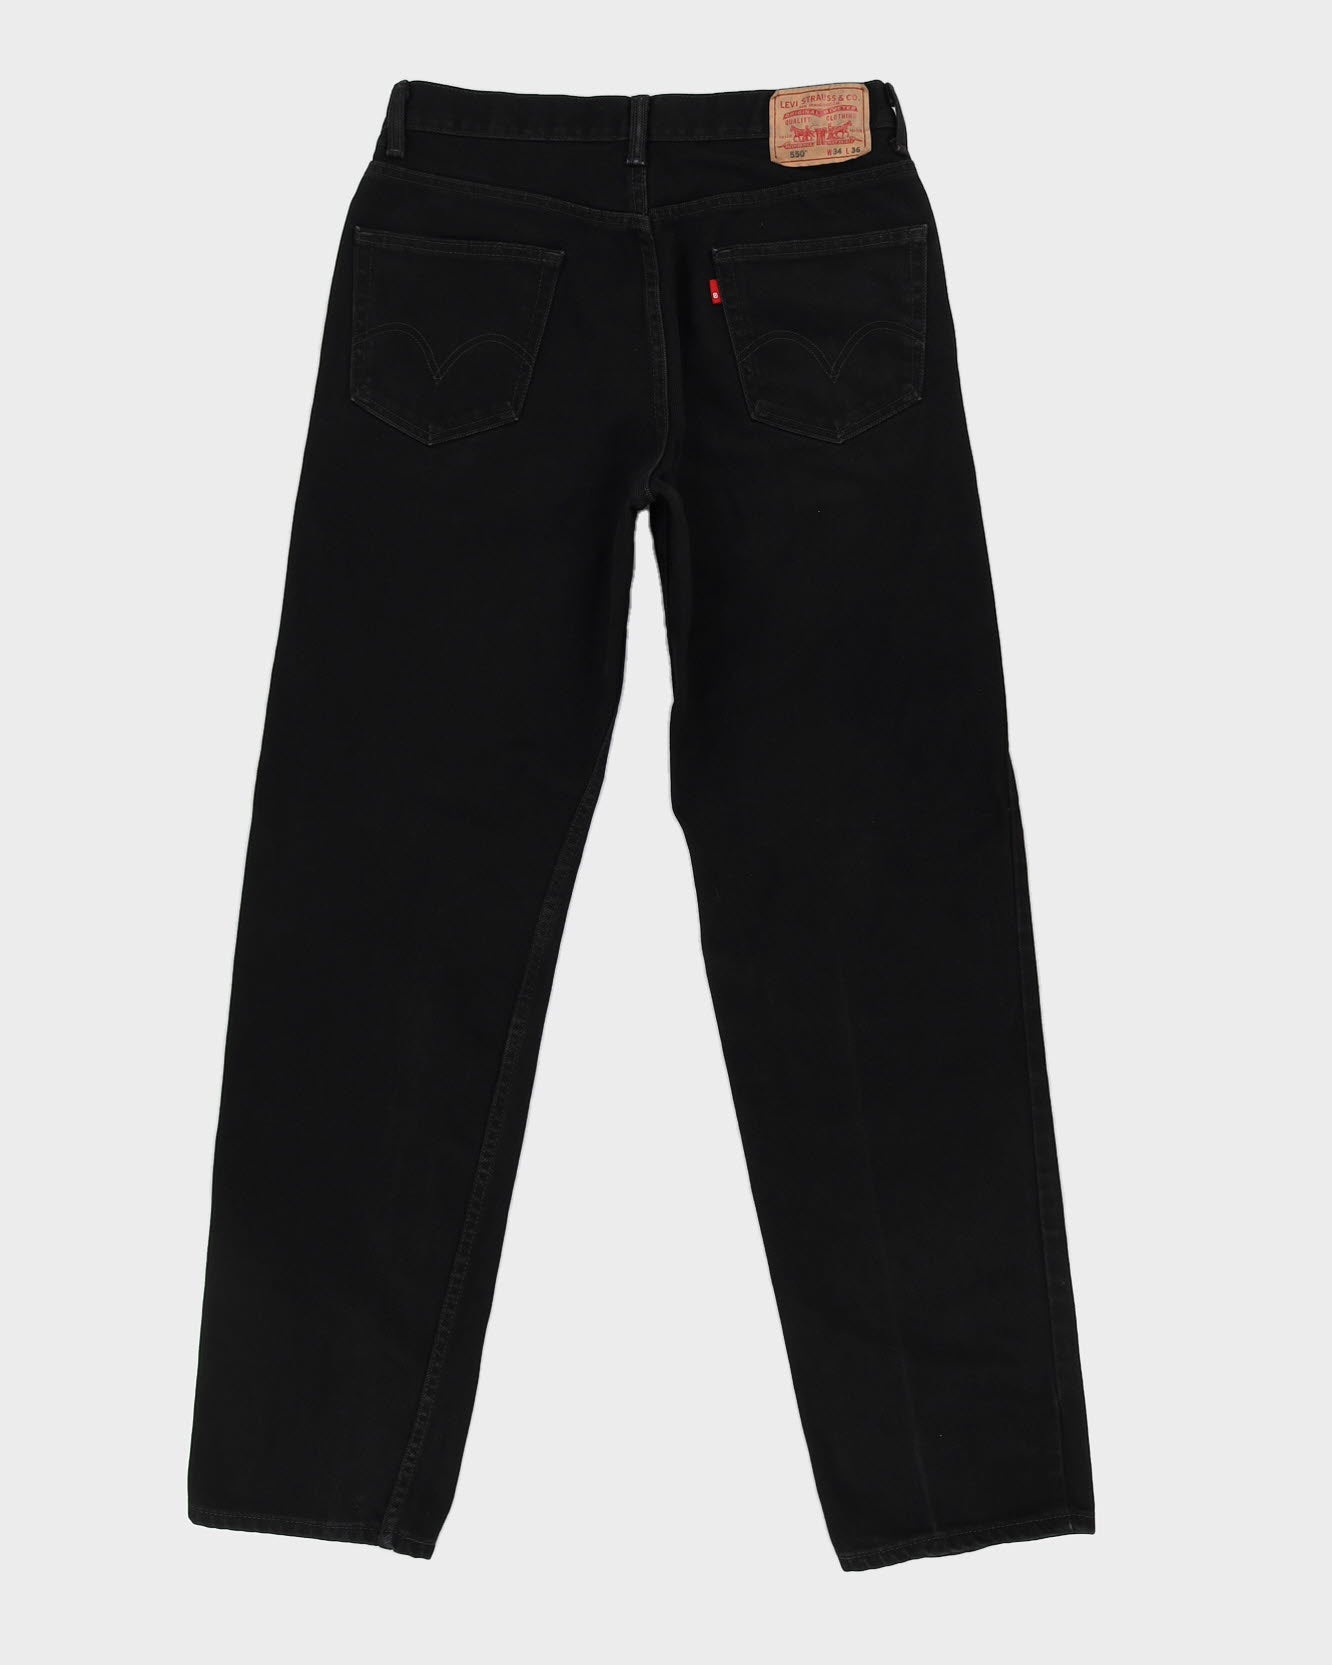 Levi's 550 Black Jeans  - W34 L 35